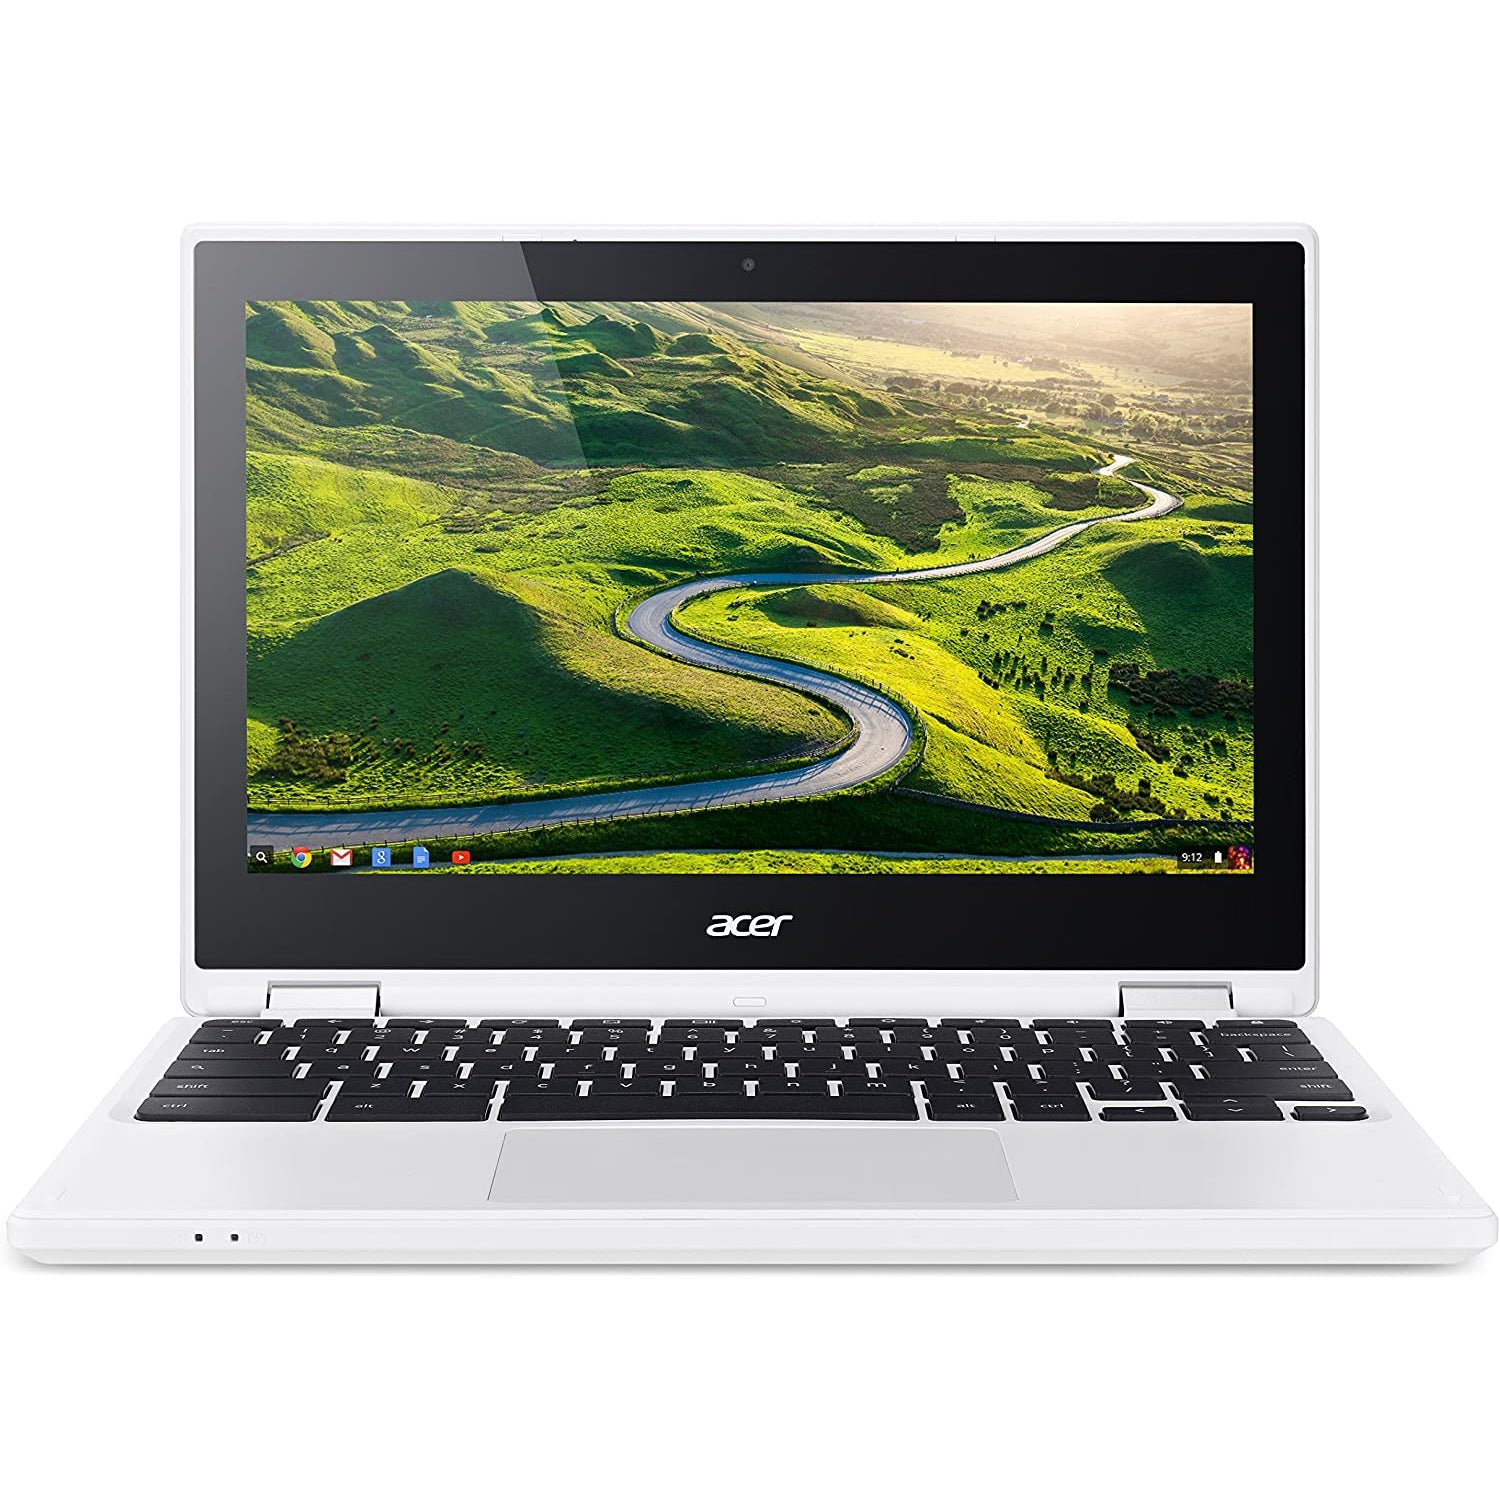 Acer CB5-132T 11.6" Laptop, Intel Celeron, 2GB RAM, 32GB eMMC, White - Refurbished Excellent